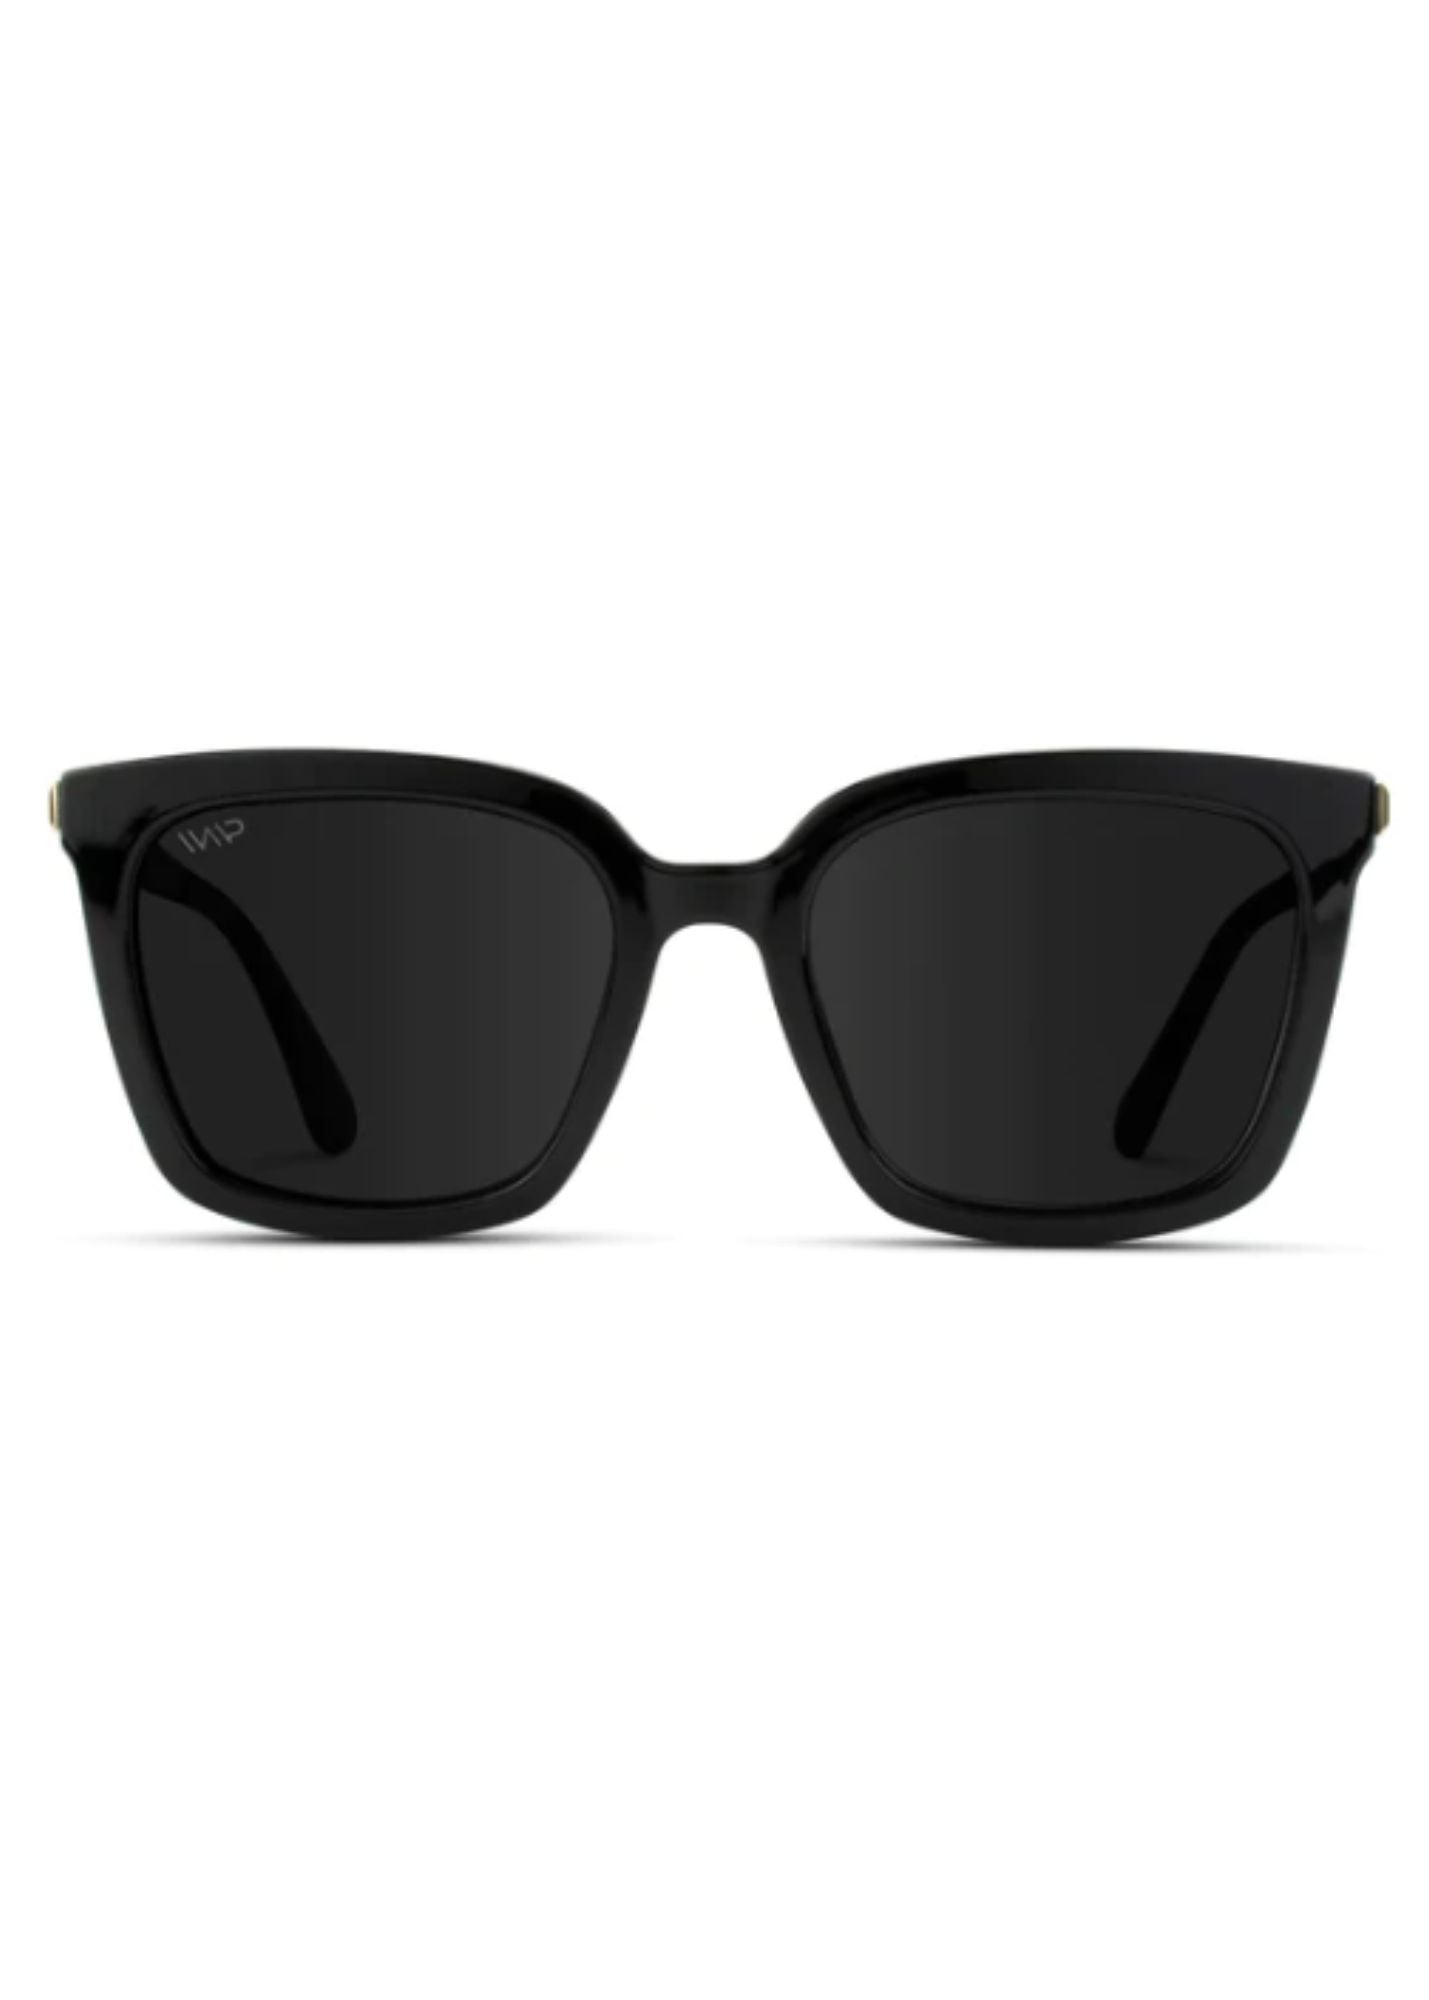 Square Frame Sunglasses Accessories